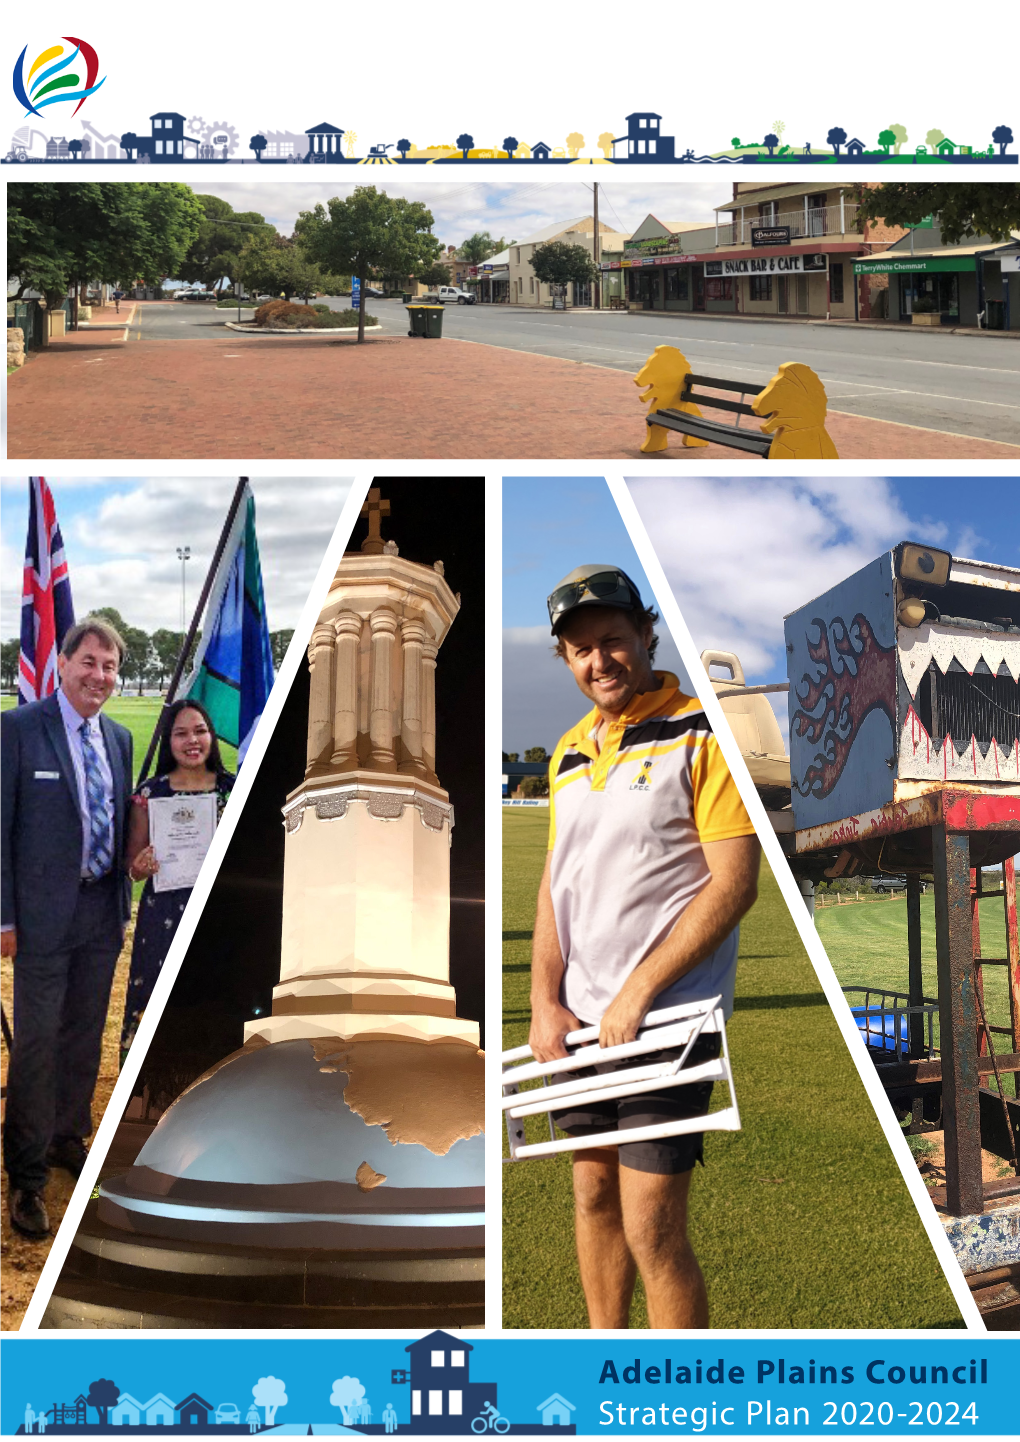 Adelaide Plains Council Strategic Plan 2020-2024